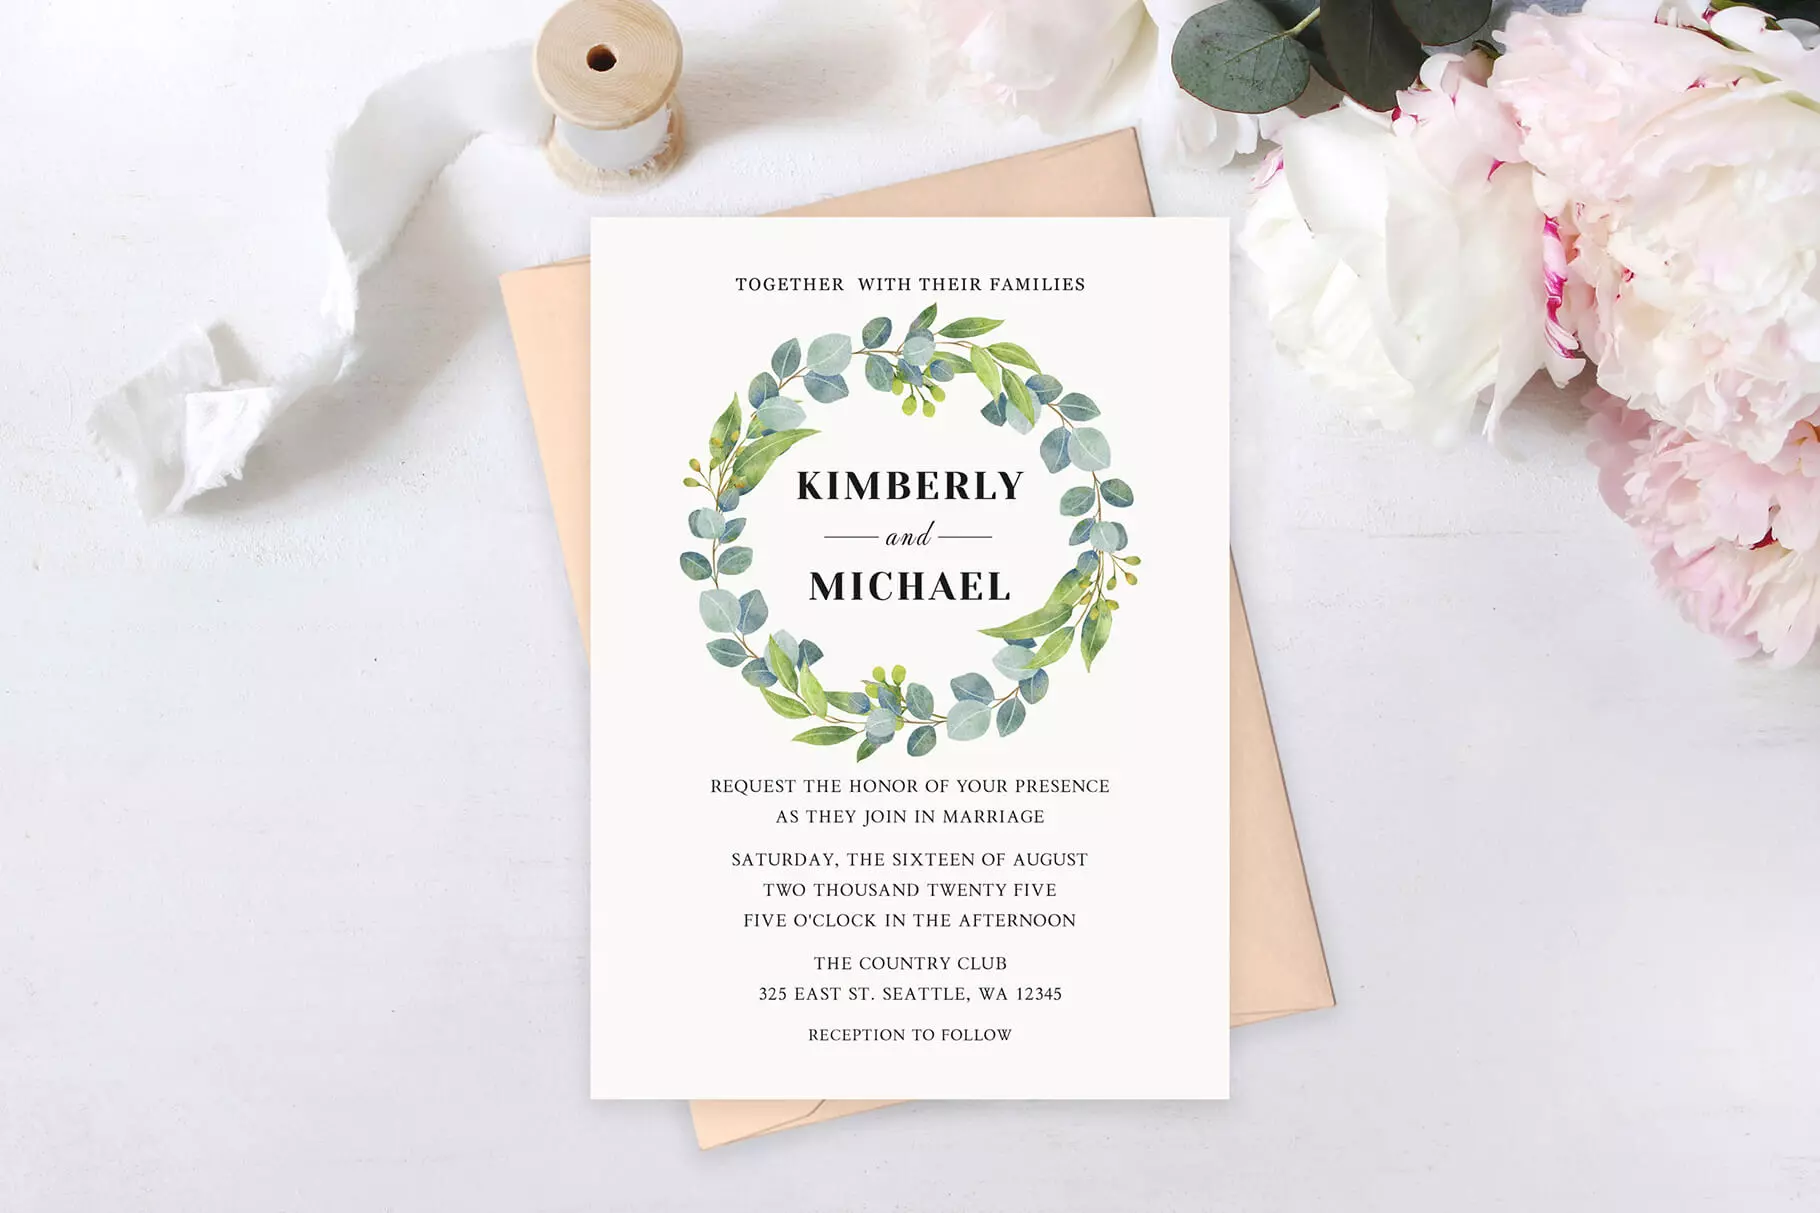 Eucalyptus Green Wreath Wedding Invitation